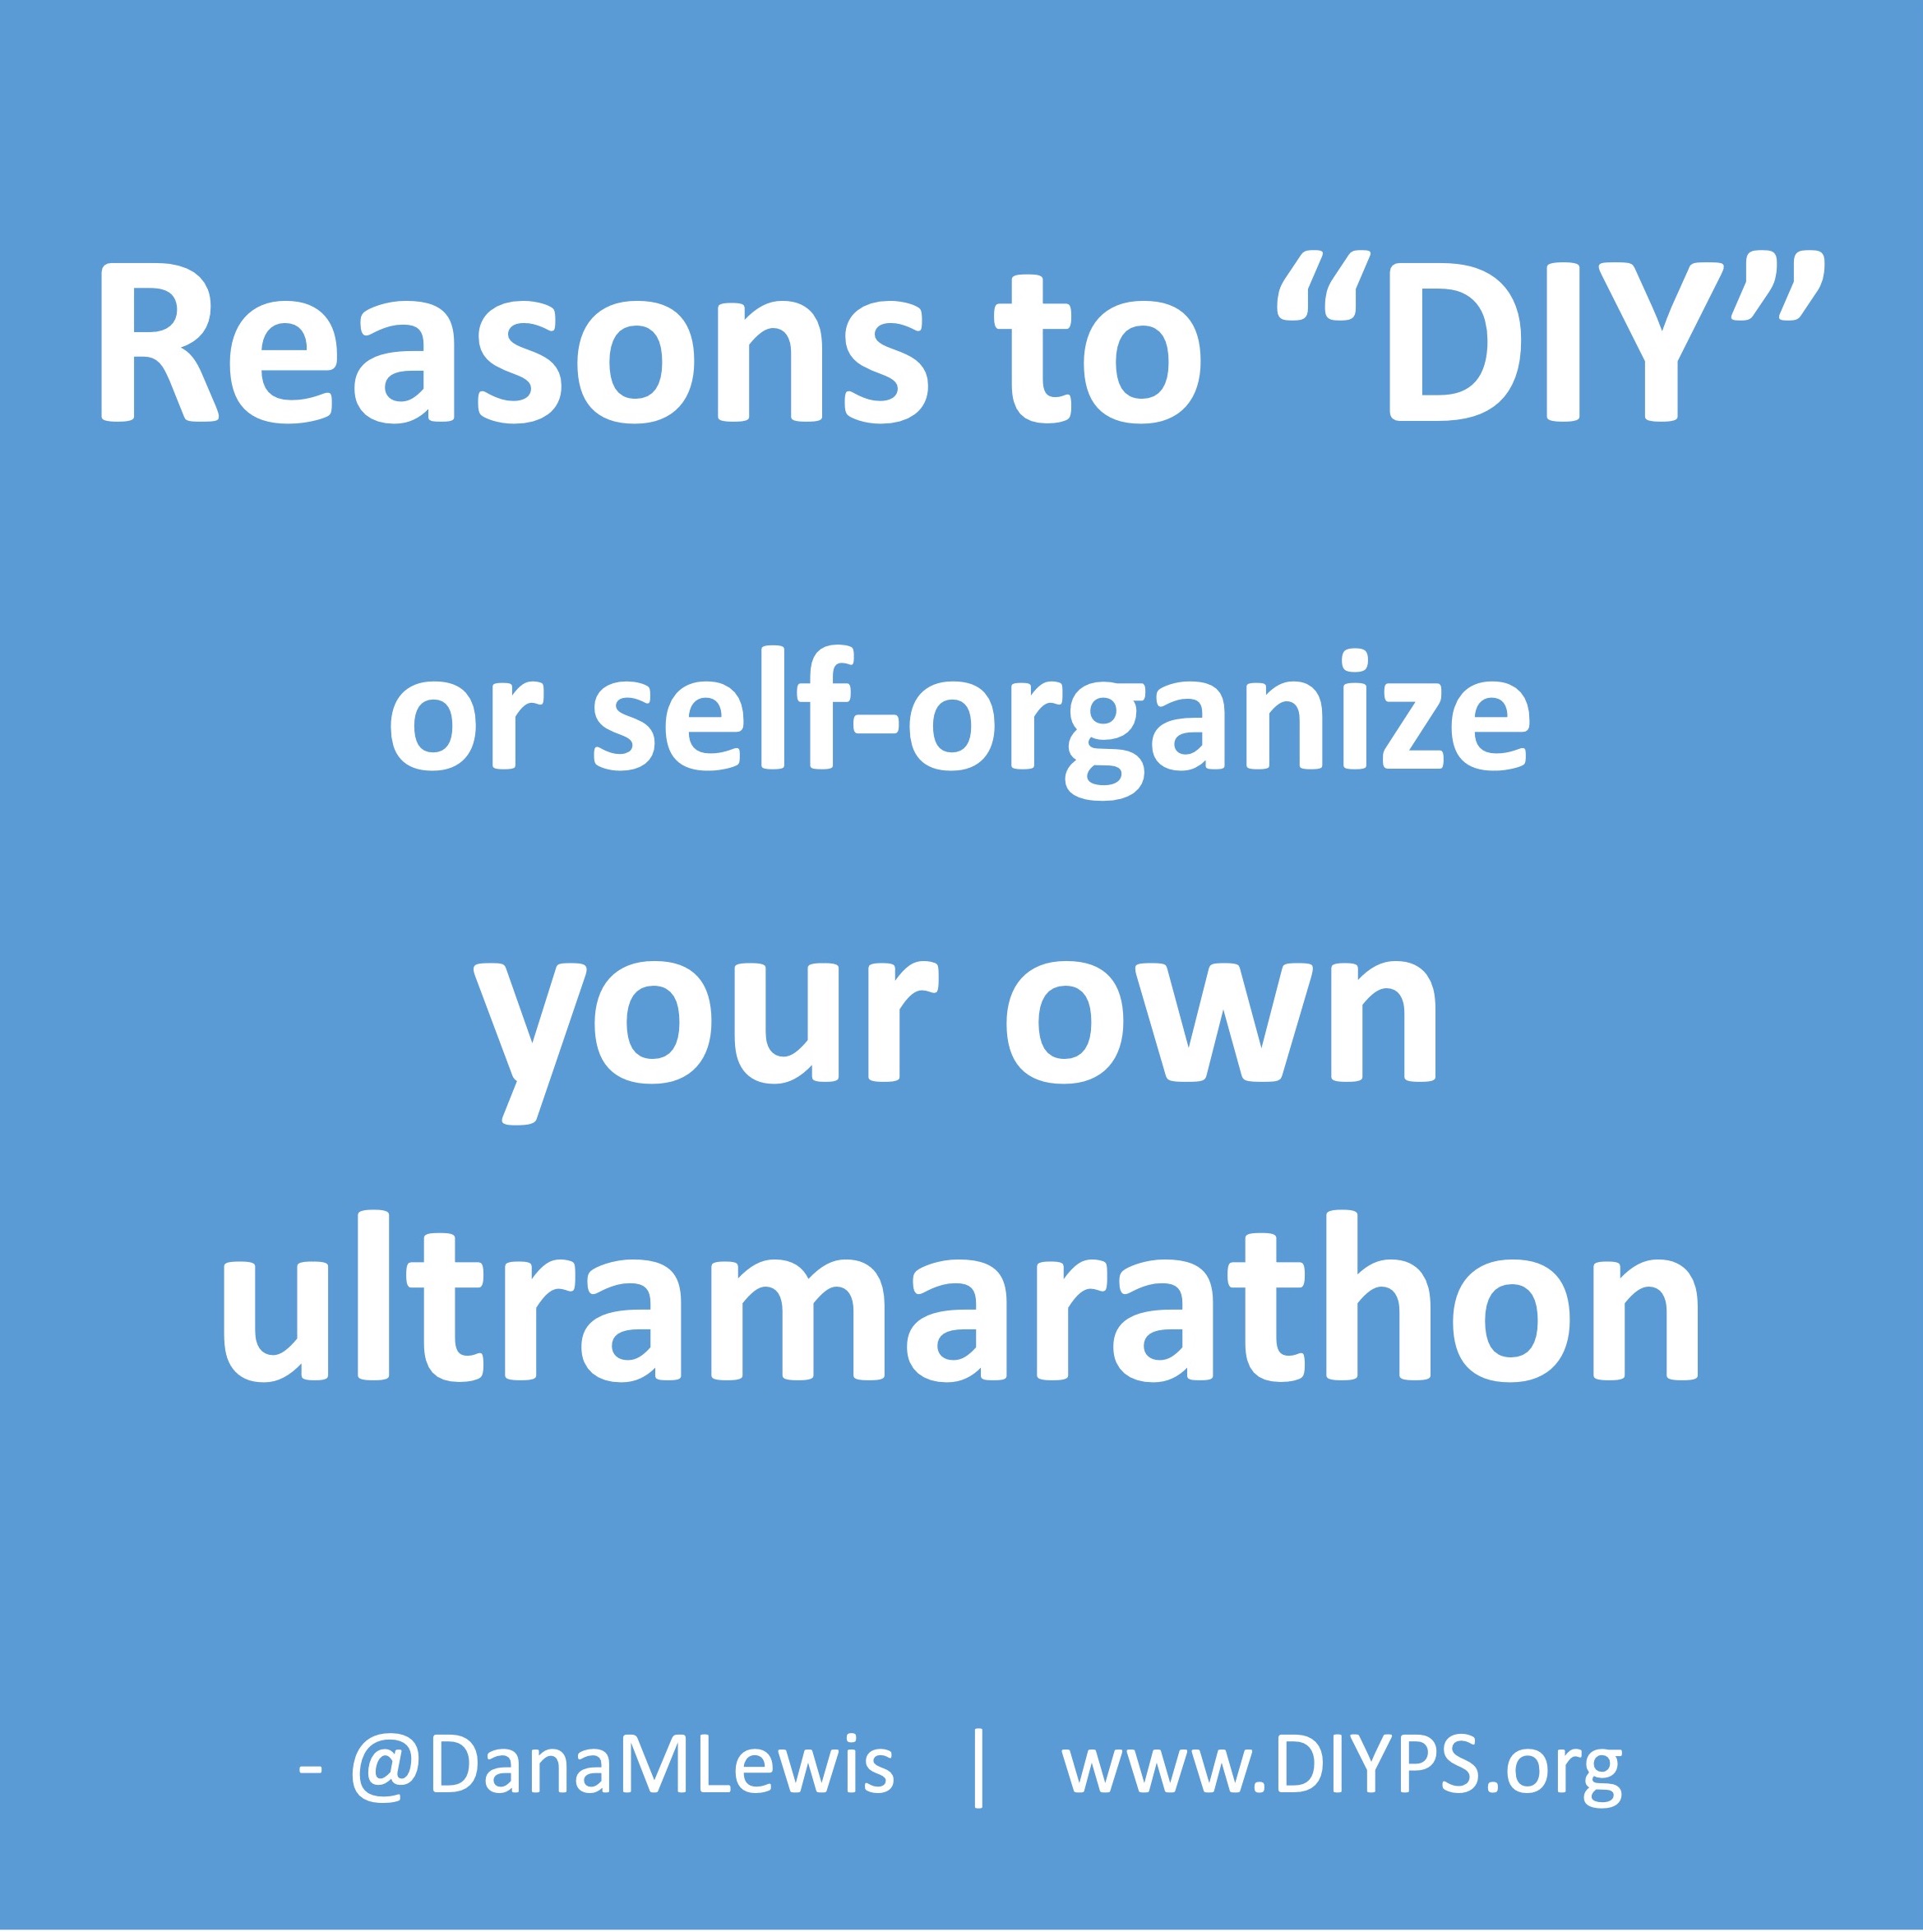 Reasons to "DIY" or self-organize your own ultramarathon run